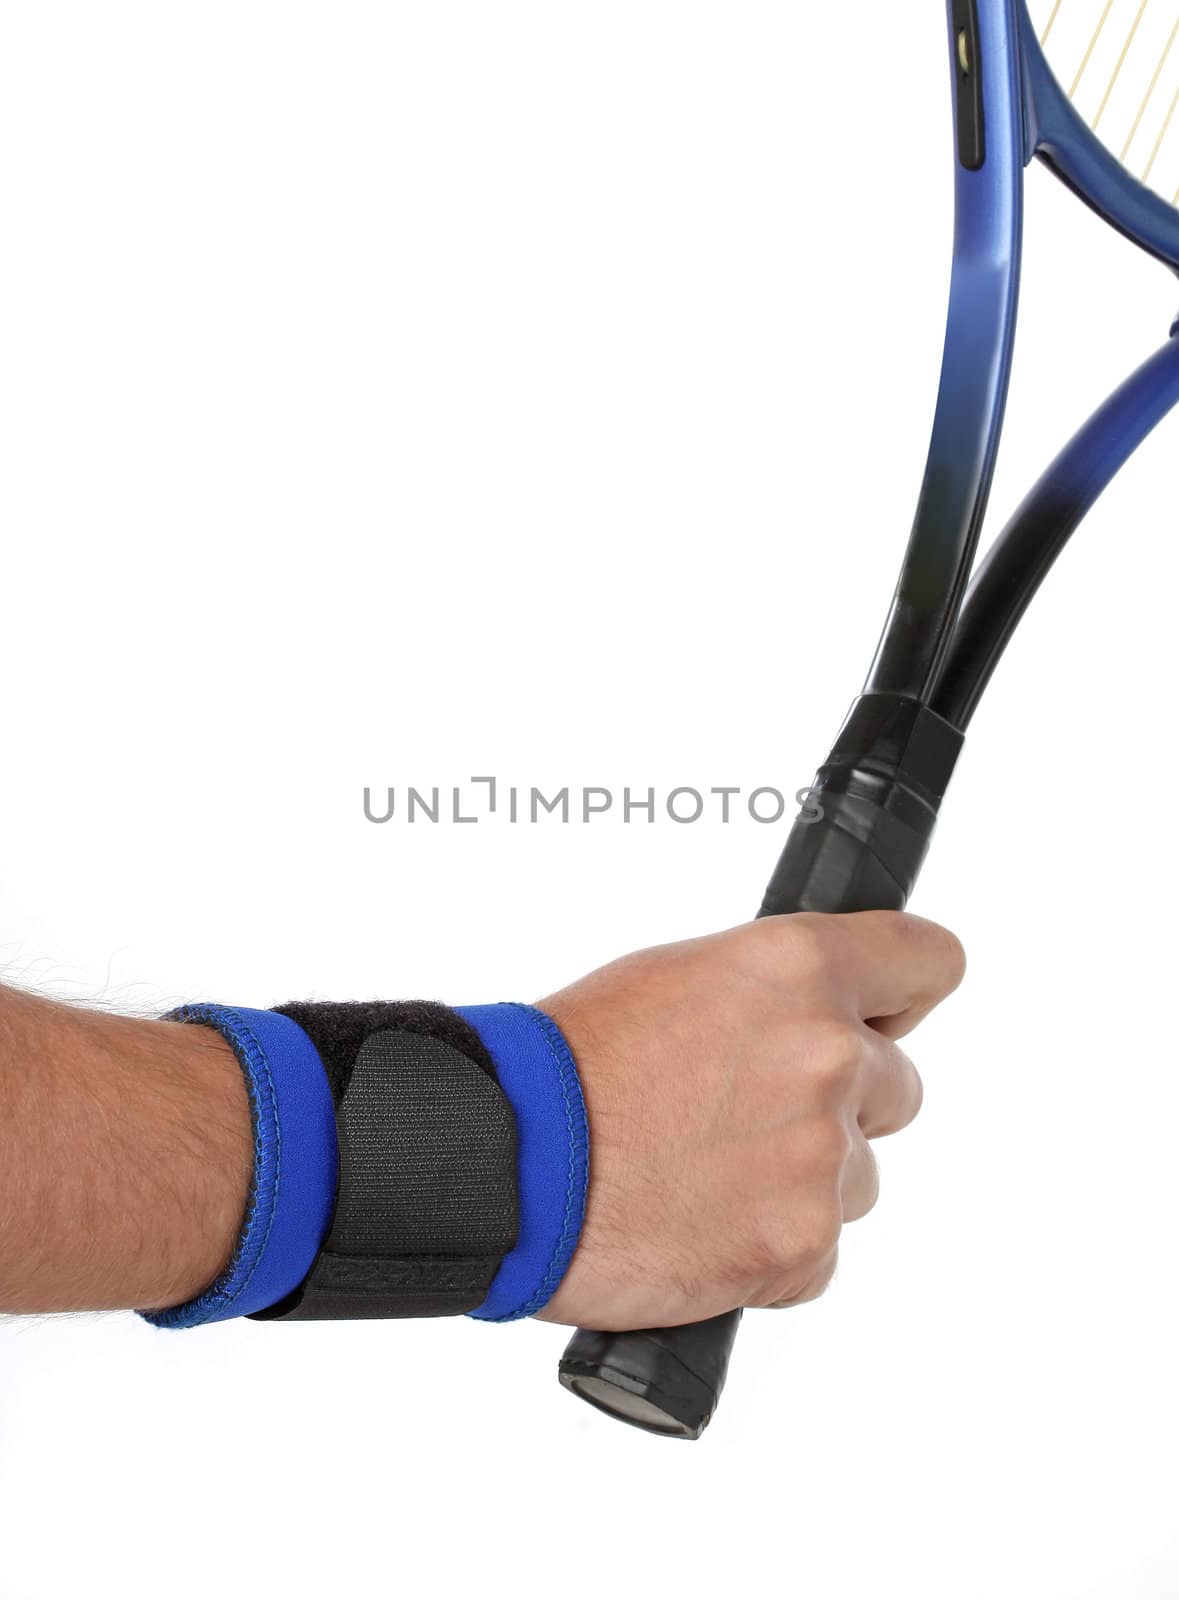 Tennis player wearing a wrist bandage by Erdosain